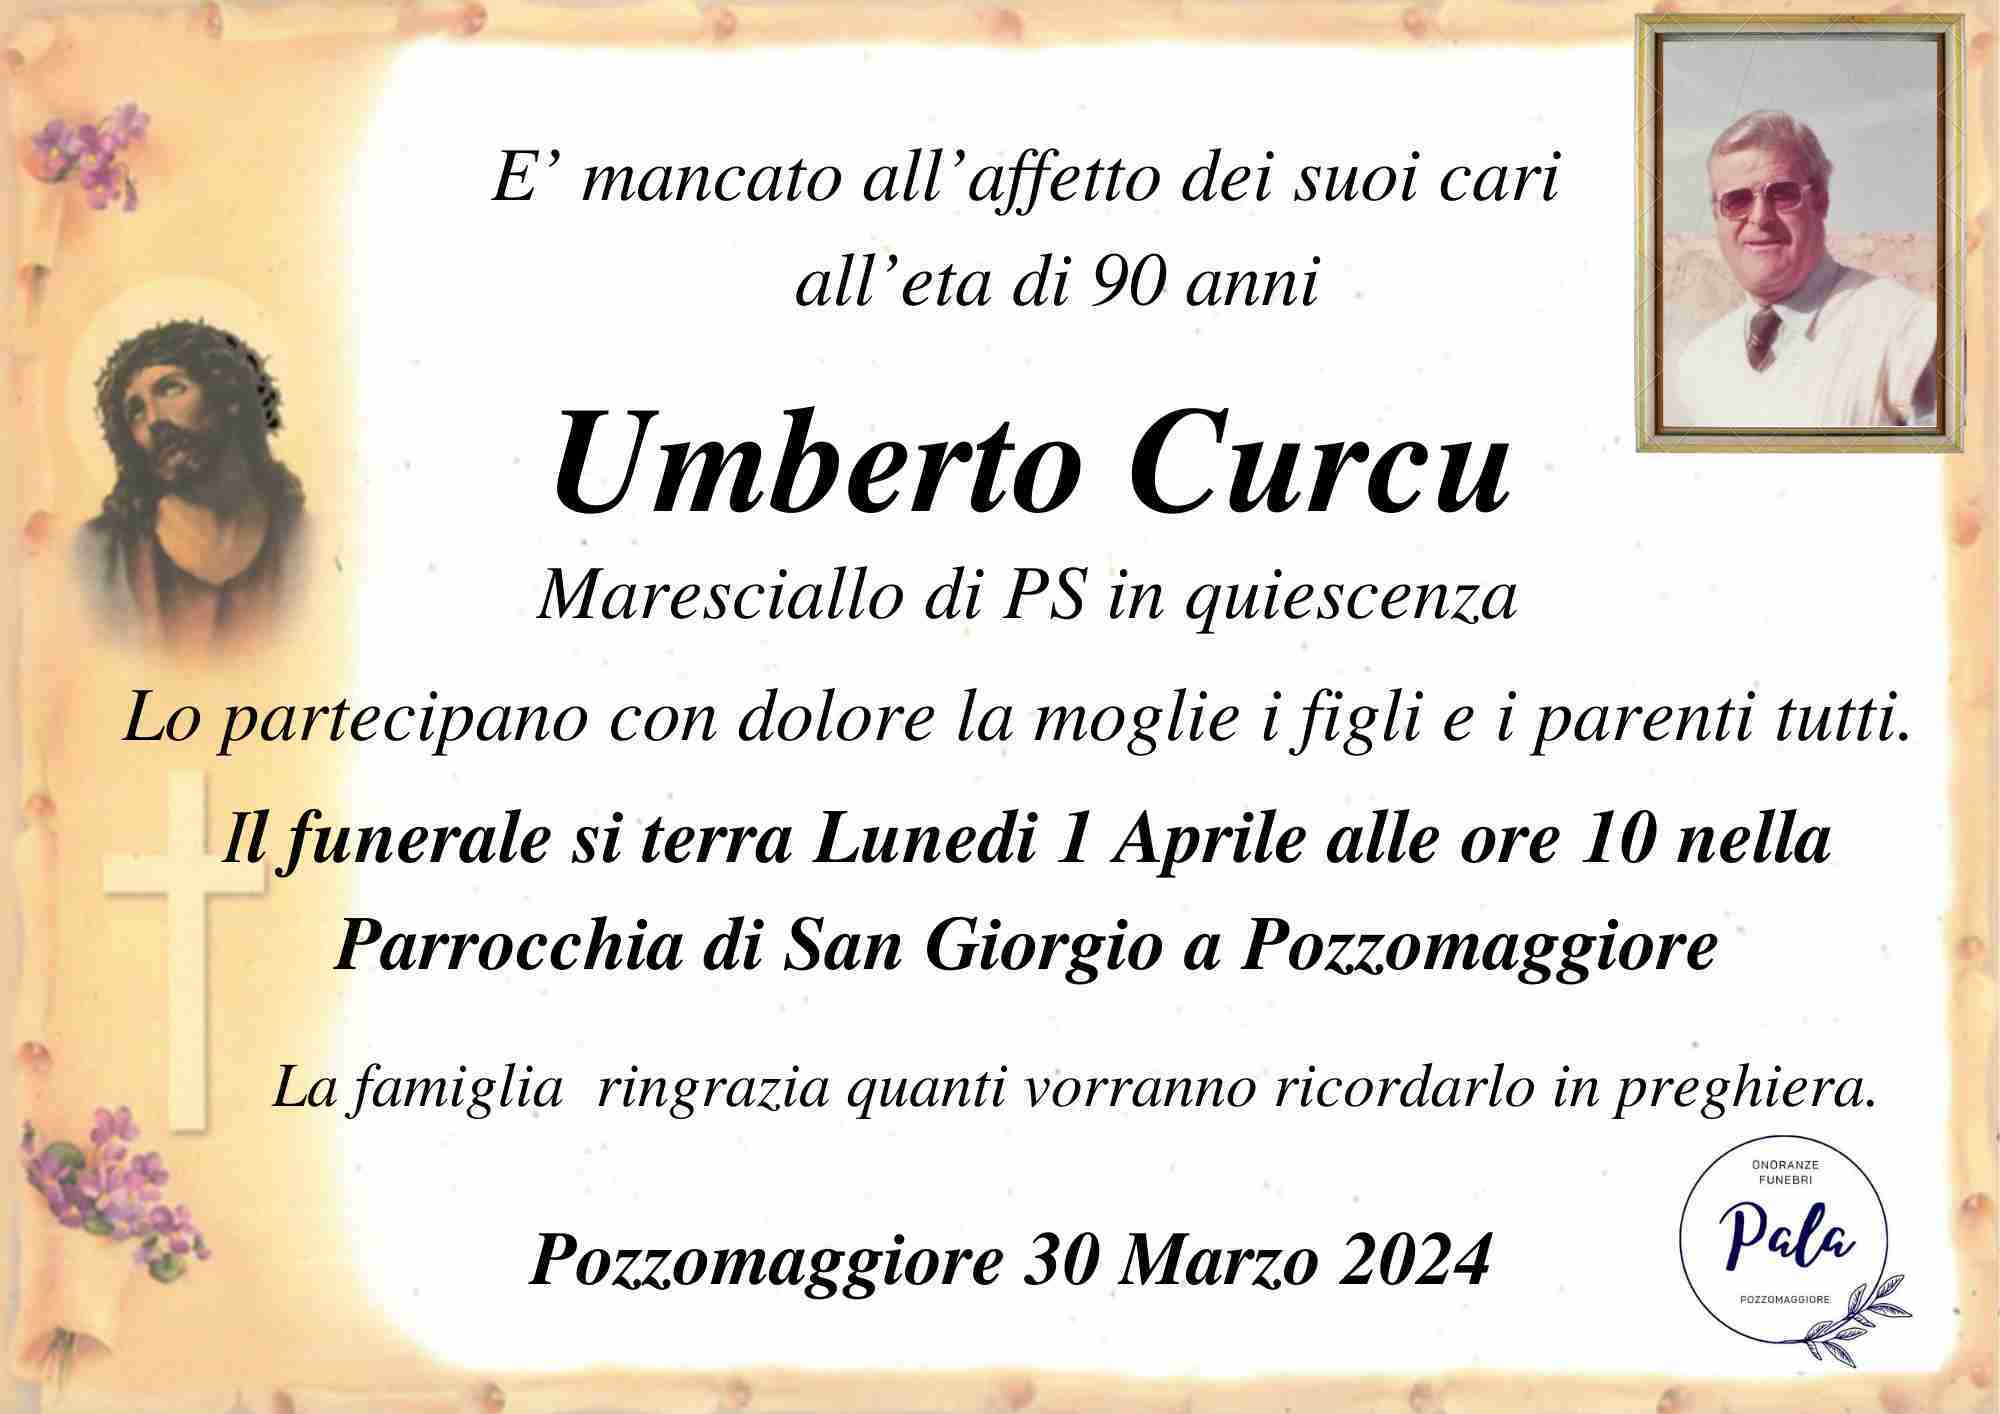 Umberto Curcu